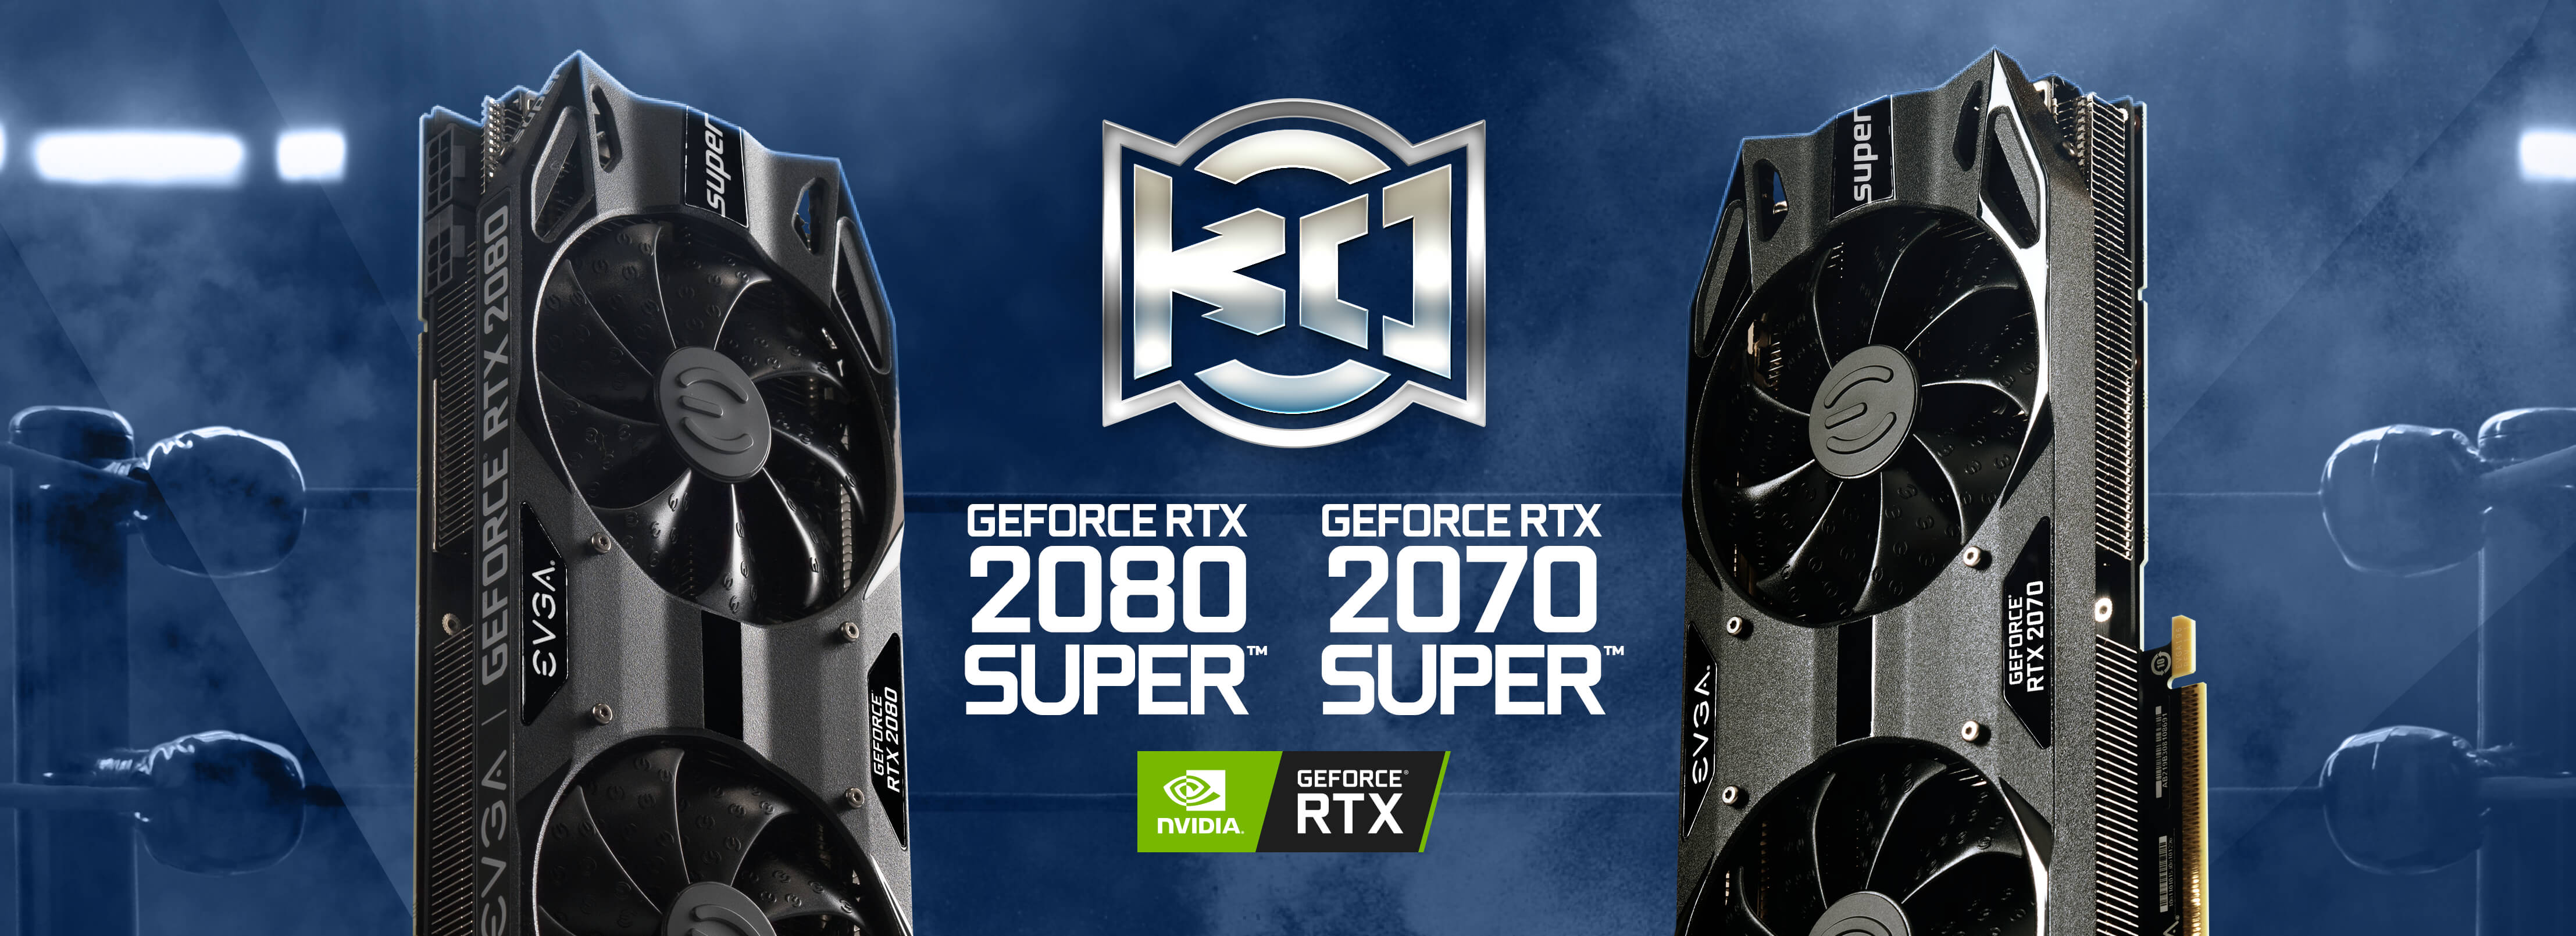 EVGA GeForce® RTX 2080/2070 SUPER™ KO